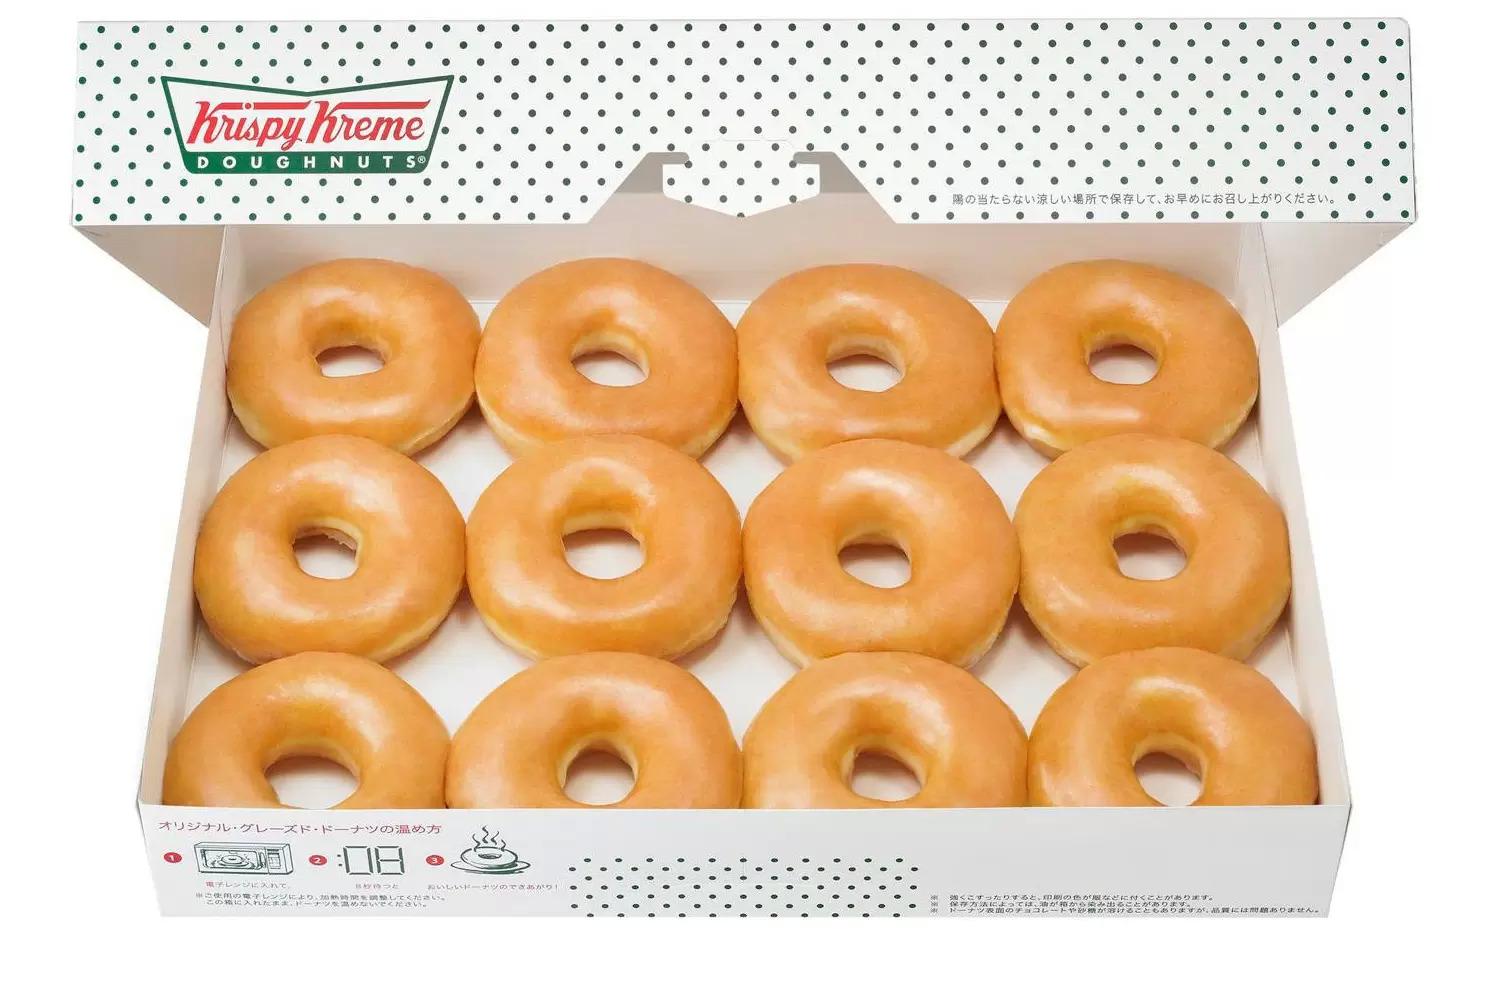 Free Dozen Krispy Kreme Original Glazed Doughnuts on Your Birthday Month